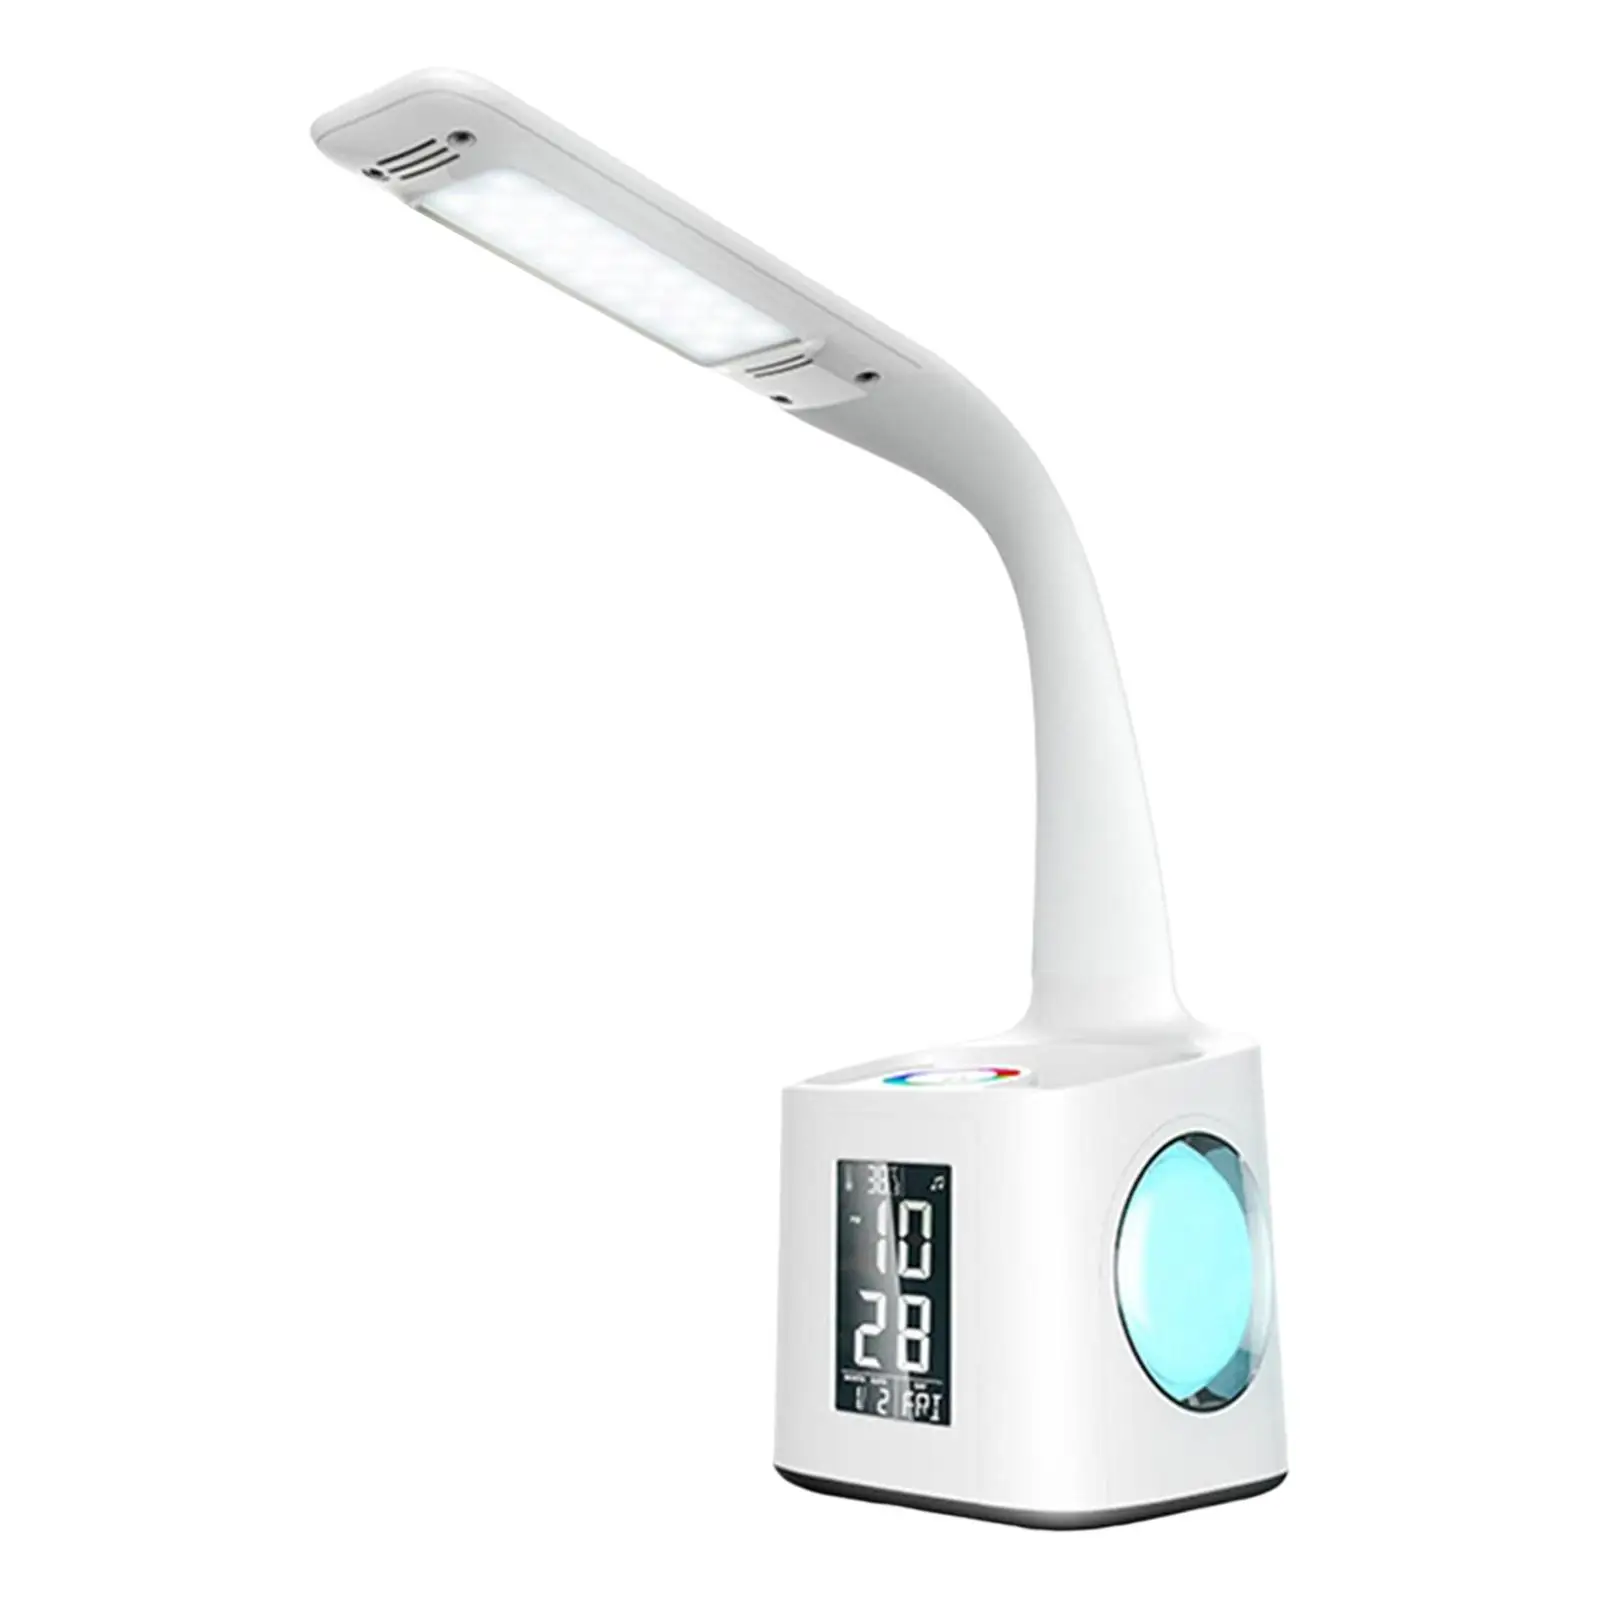 Multipurpose Desk Lamp with Pen Holder 3 Level Dimming Calendar Alarm Temperature Desktop USB Charging Reading Lamp for Office